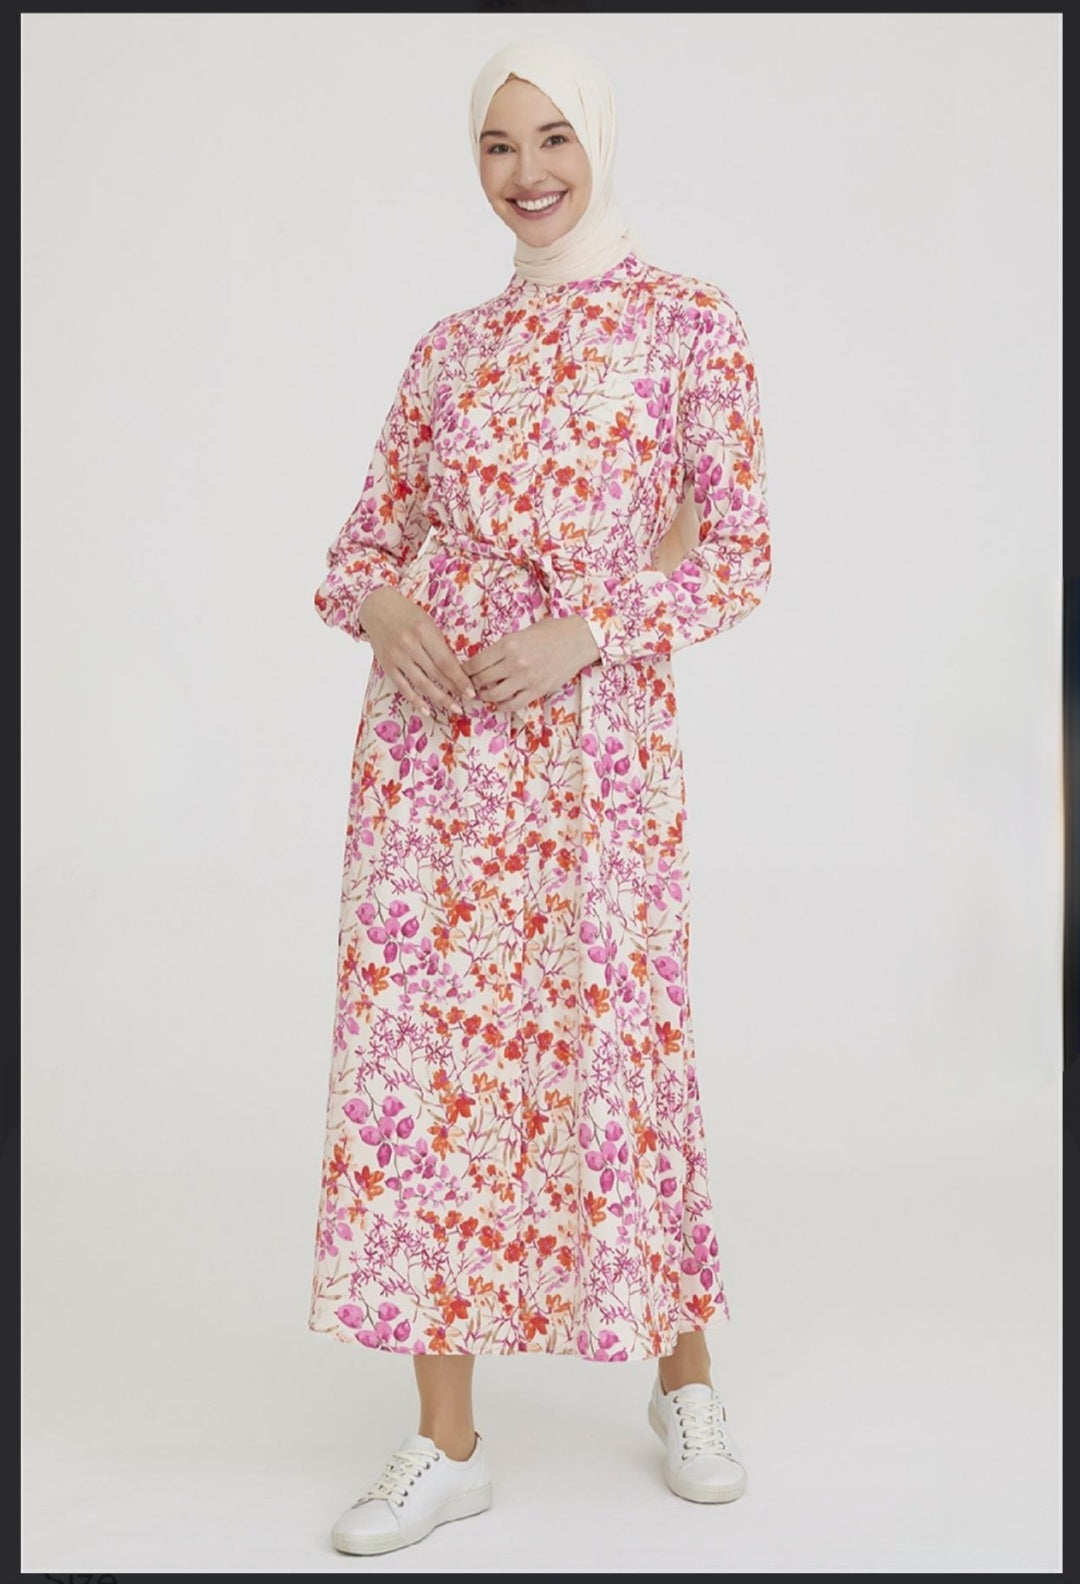 Armine floral shirt dress